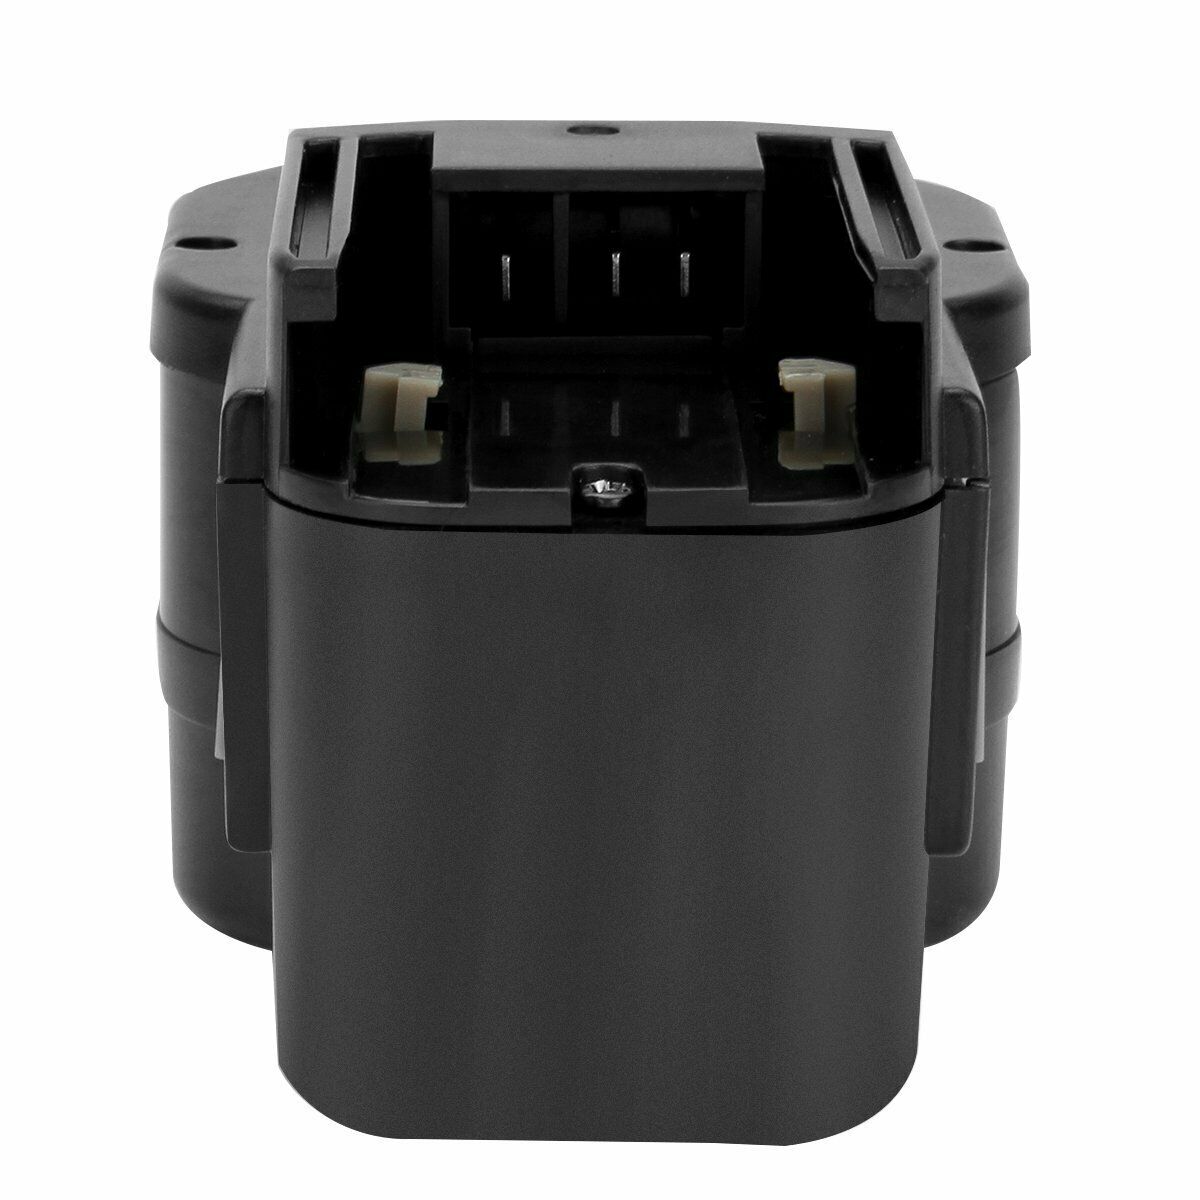 12V 3300mAh Atlas Copco AEG Milwaukee kompatybilny bateria - Kliknij obrazek, aby zamkn±æ